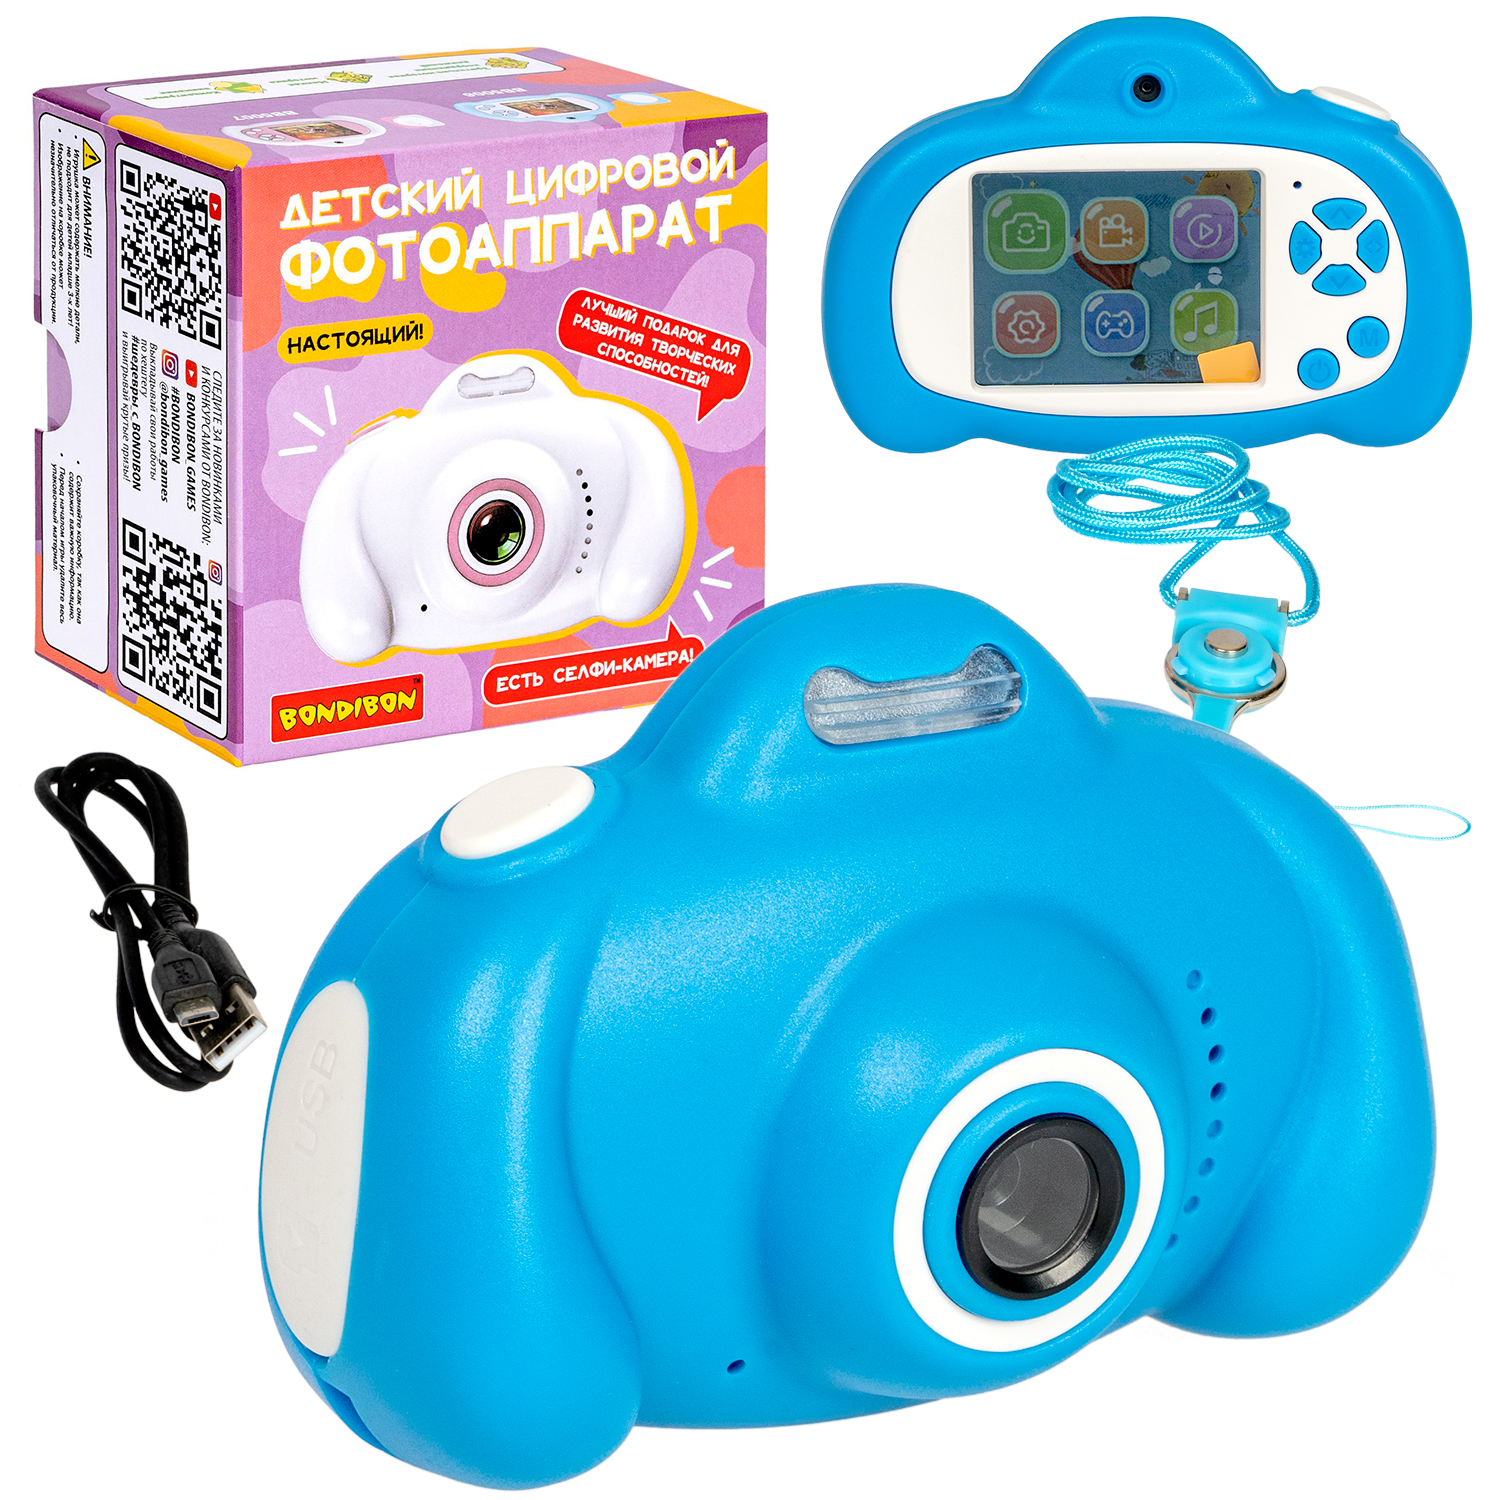 Цифровой фотоаппарат BONDIBON с селфи камерой и видео съемкой голубого цвета - фото 1